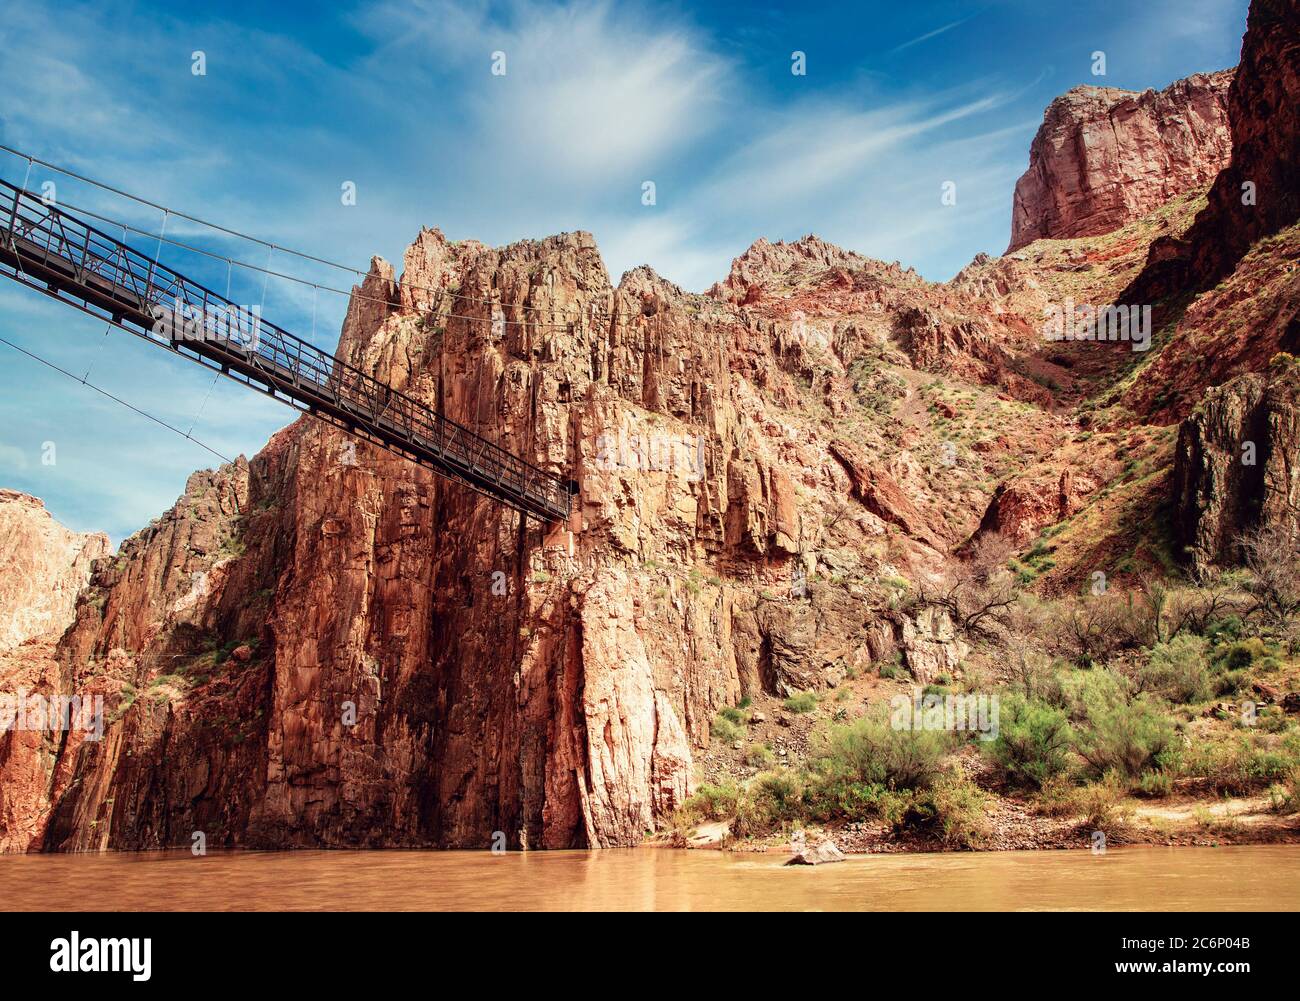 The Kaibab Suspension Bridge or Black Bridge crosses the Colorado River in the Grand Canyon basin near Phantom Ranch in Arizona. Stock Photo